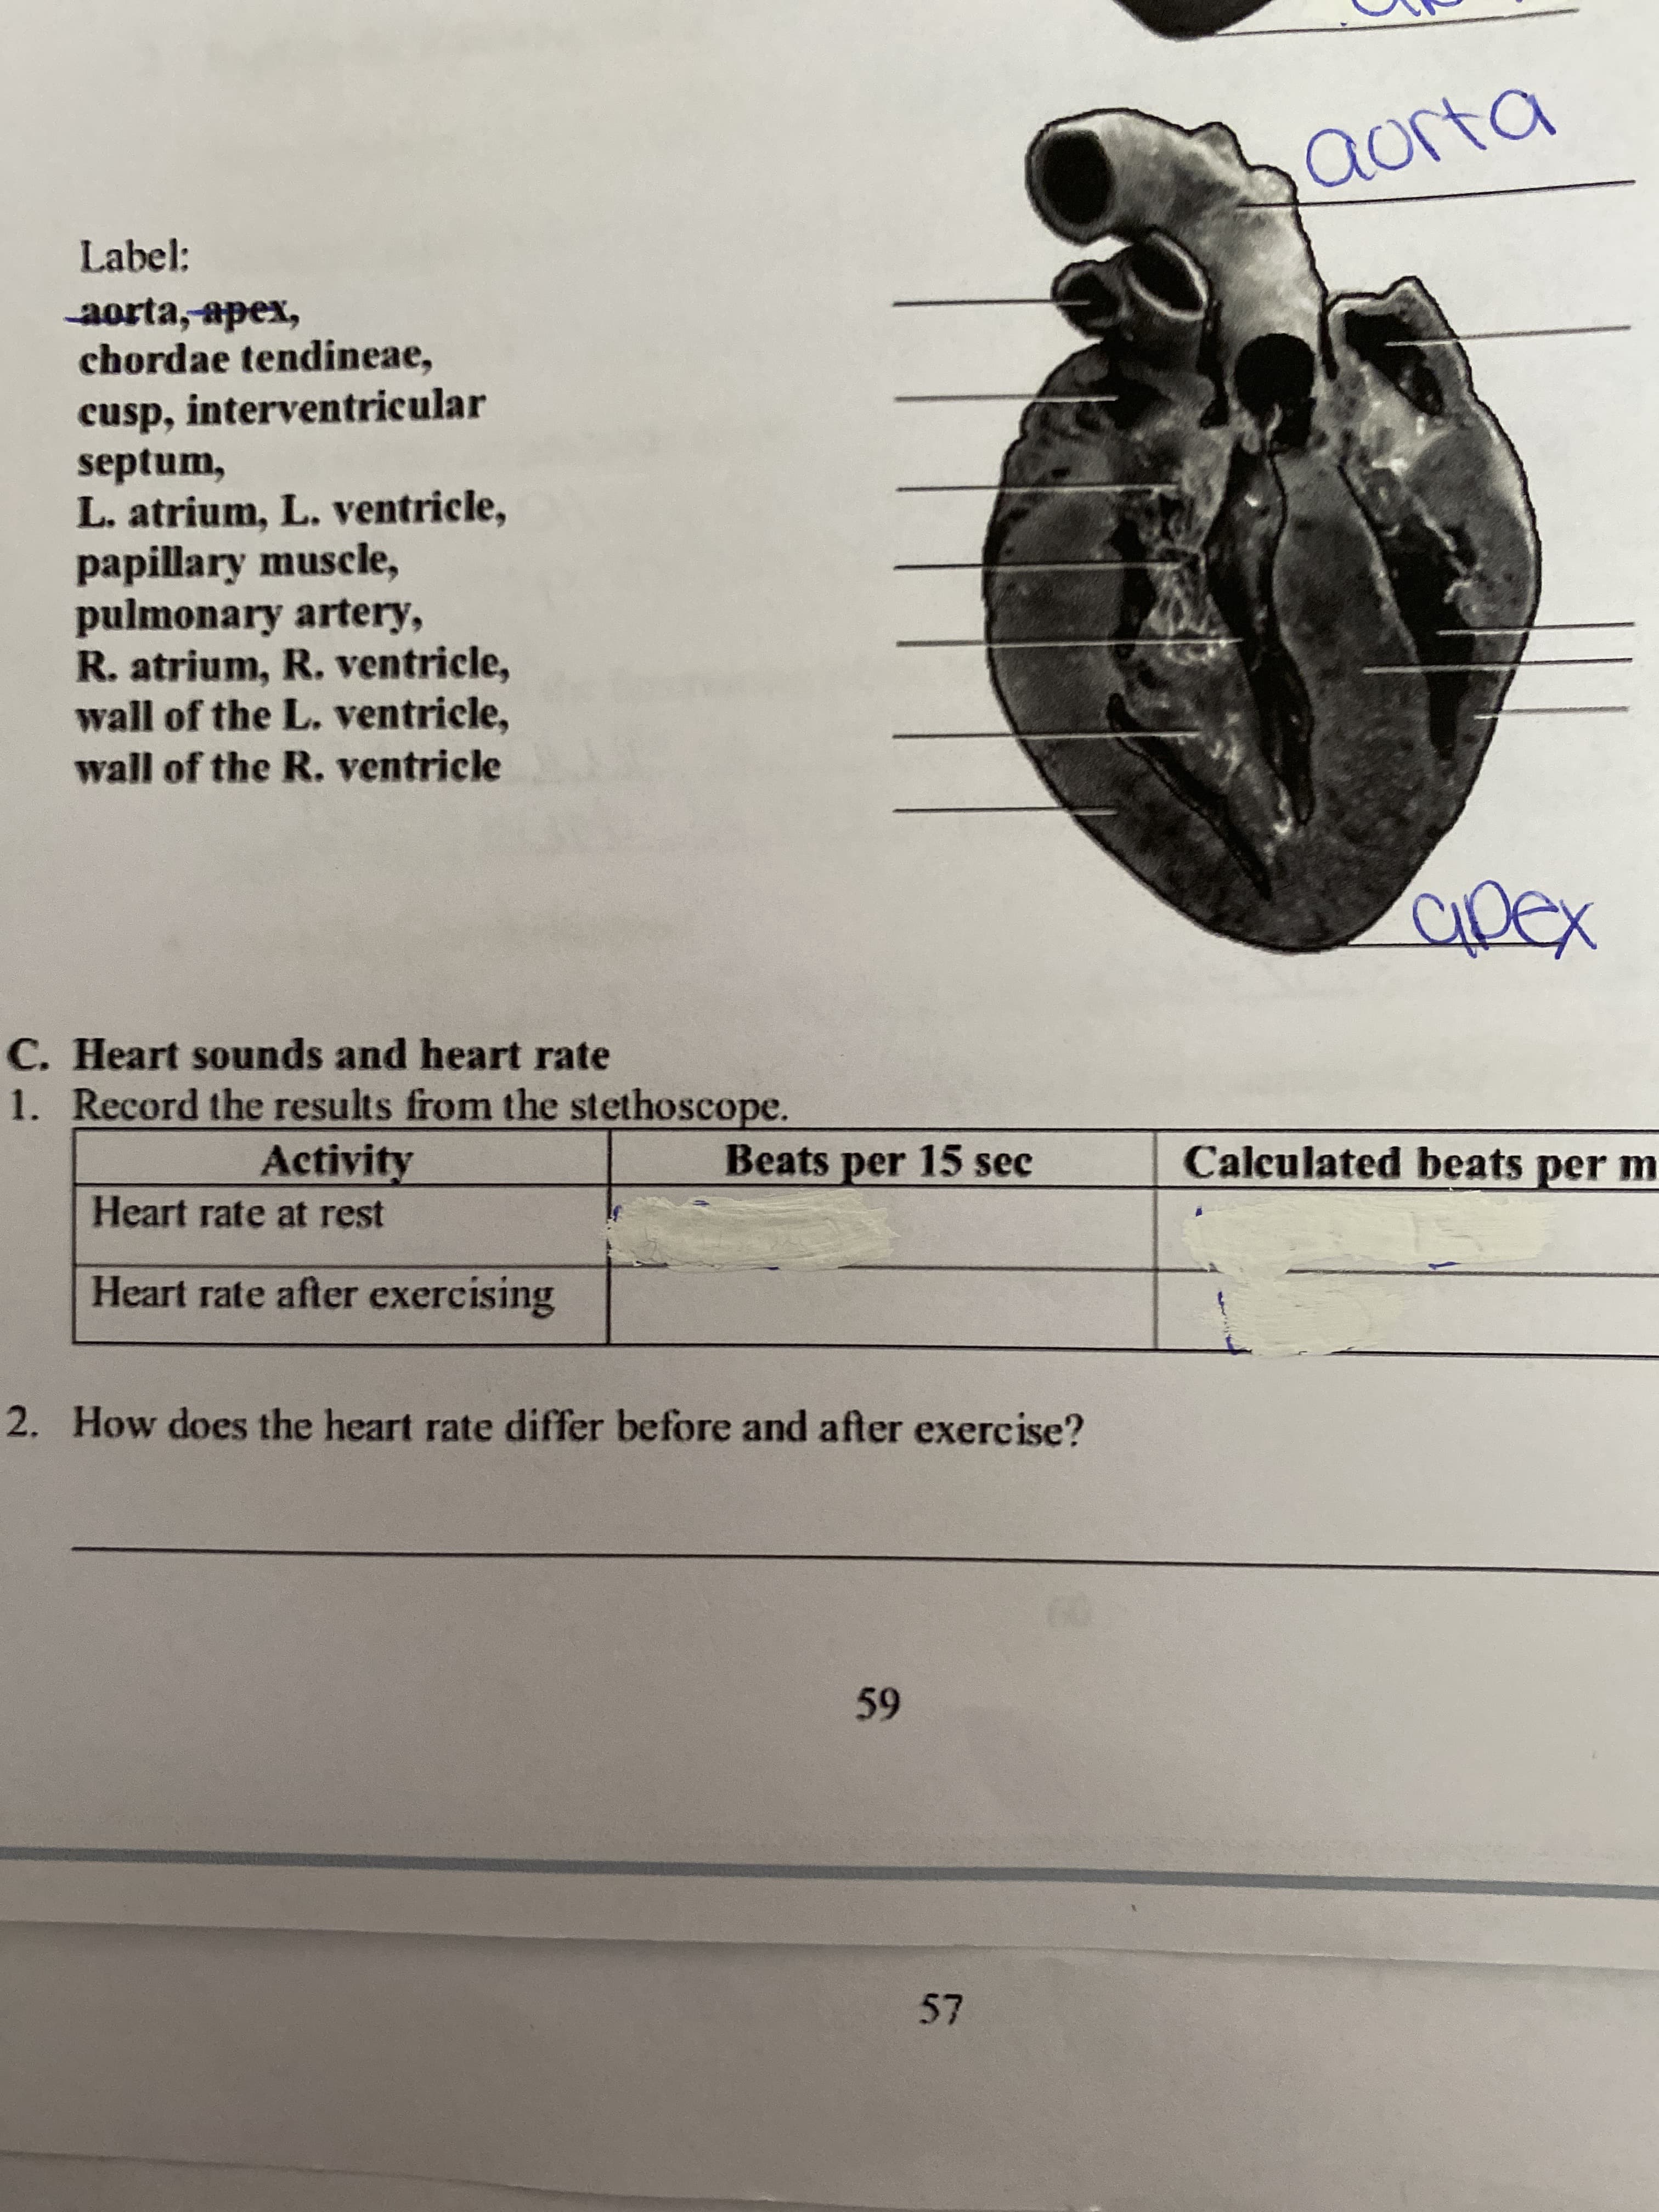 Label:
aorta,apex,
chordae tendineae,
cusp, interventricular
septum,
L. atrium, L. ventricle,
papillary muscle,
pulmonary artery,
R. atrium, R. ventricle,
wall of the L. ventricle,
wall of the R. ventricle
